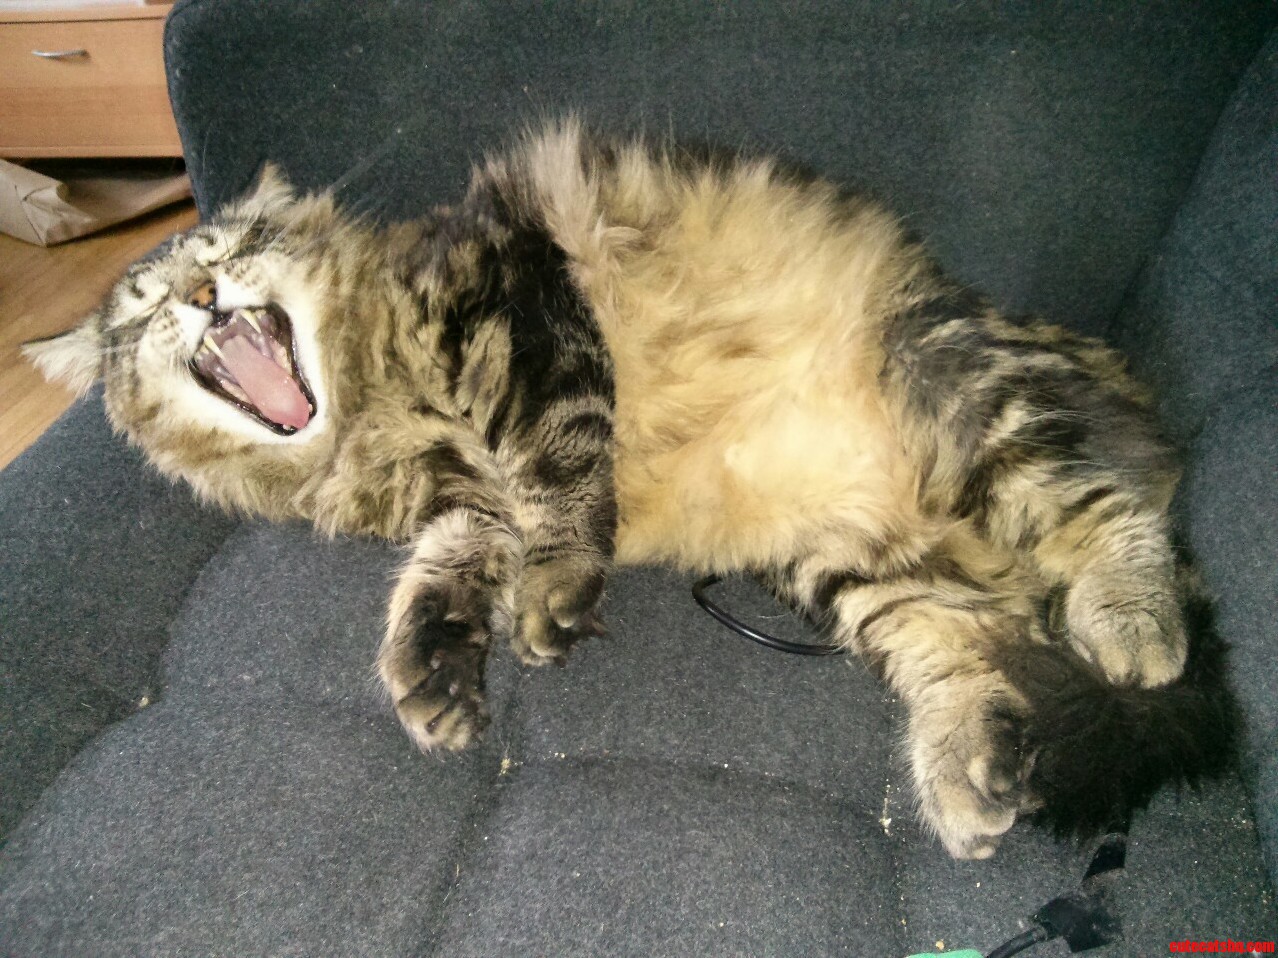 Big Cat. Big Yawn.